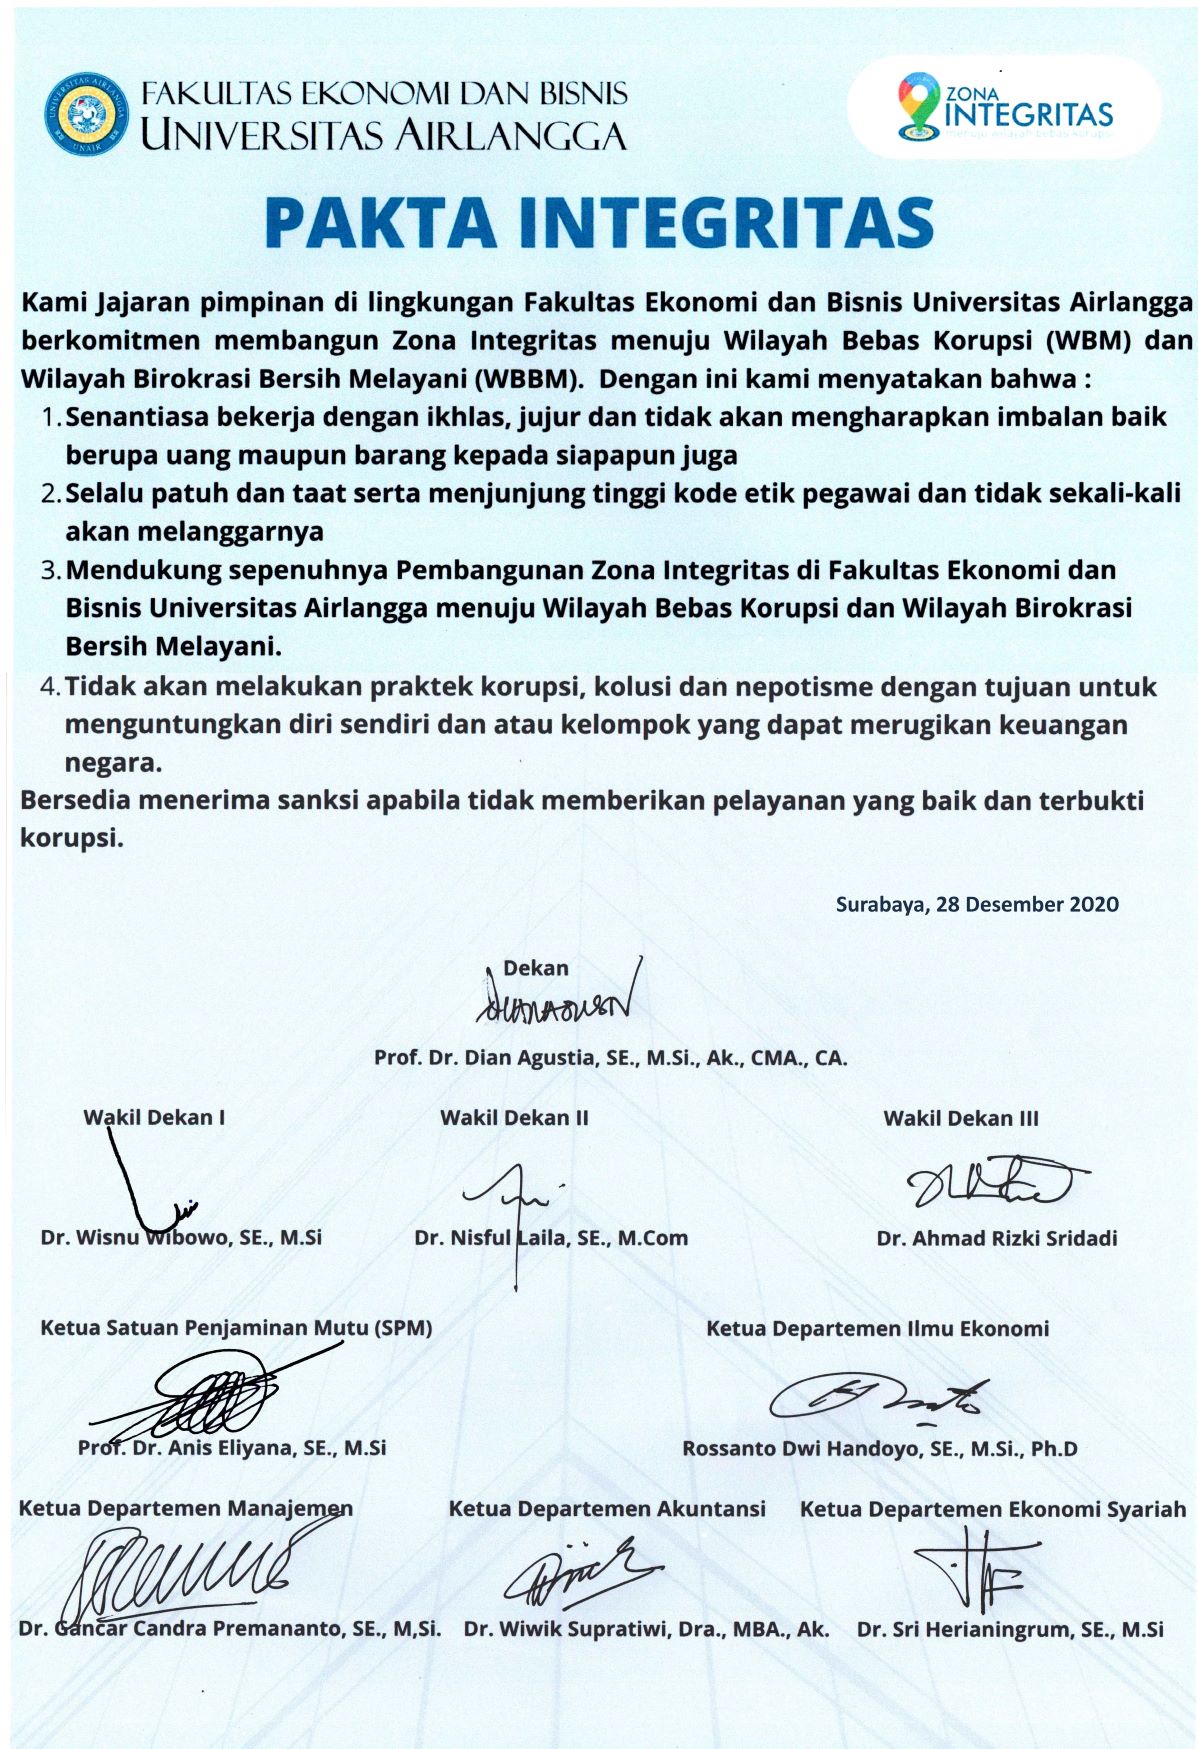 Pakta Integritas Pimpinan 9ttd 28122020 copy smallsmall